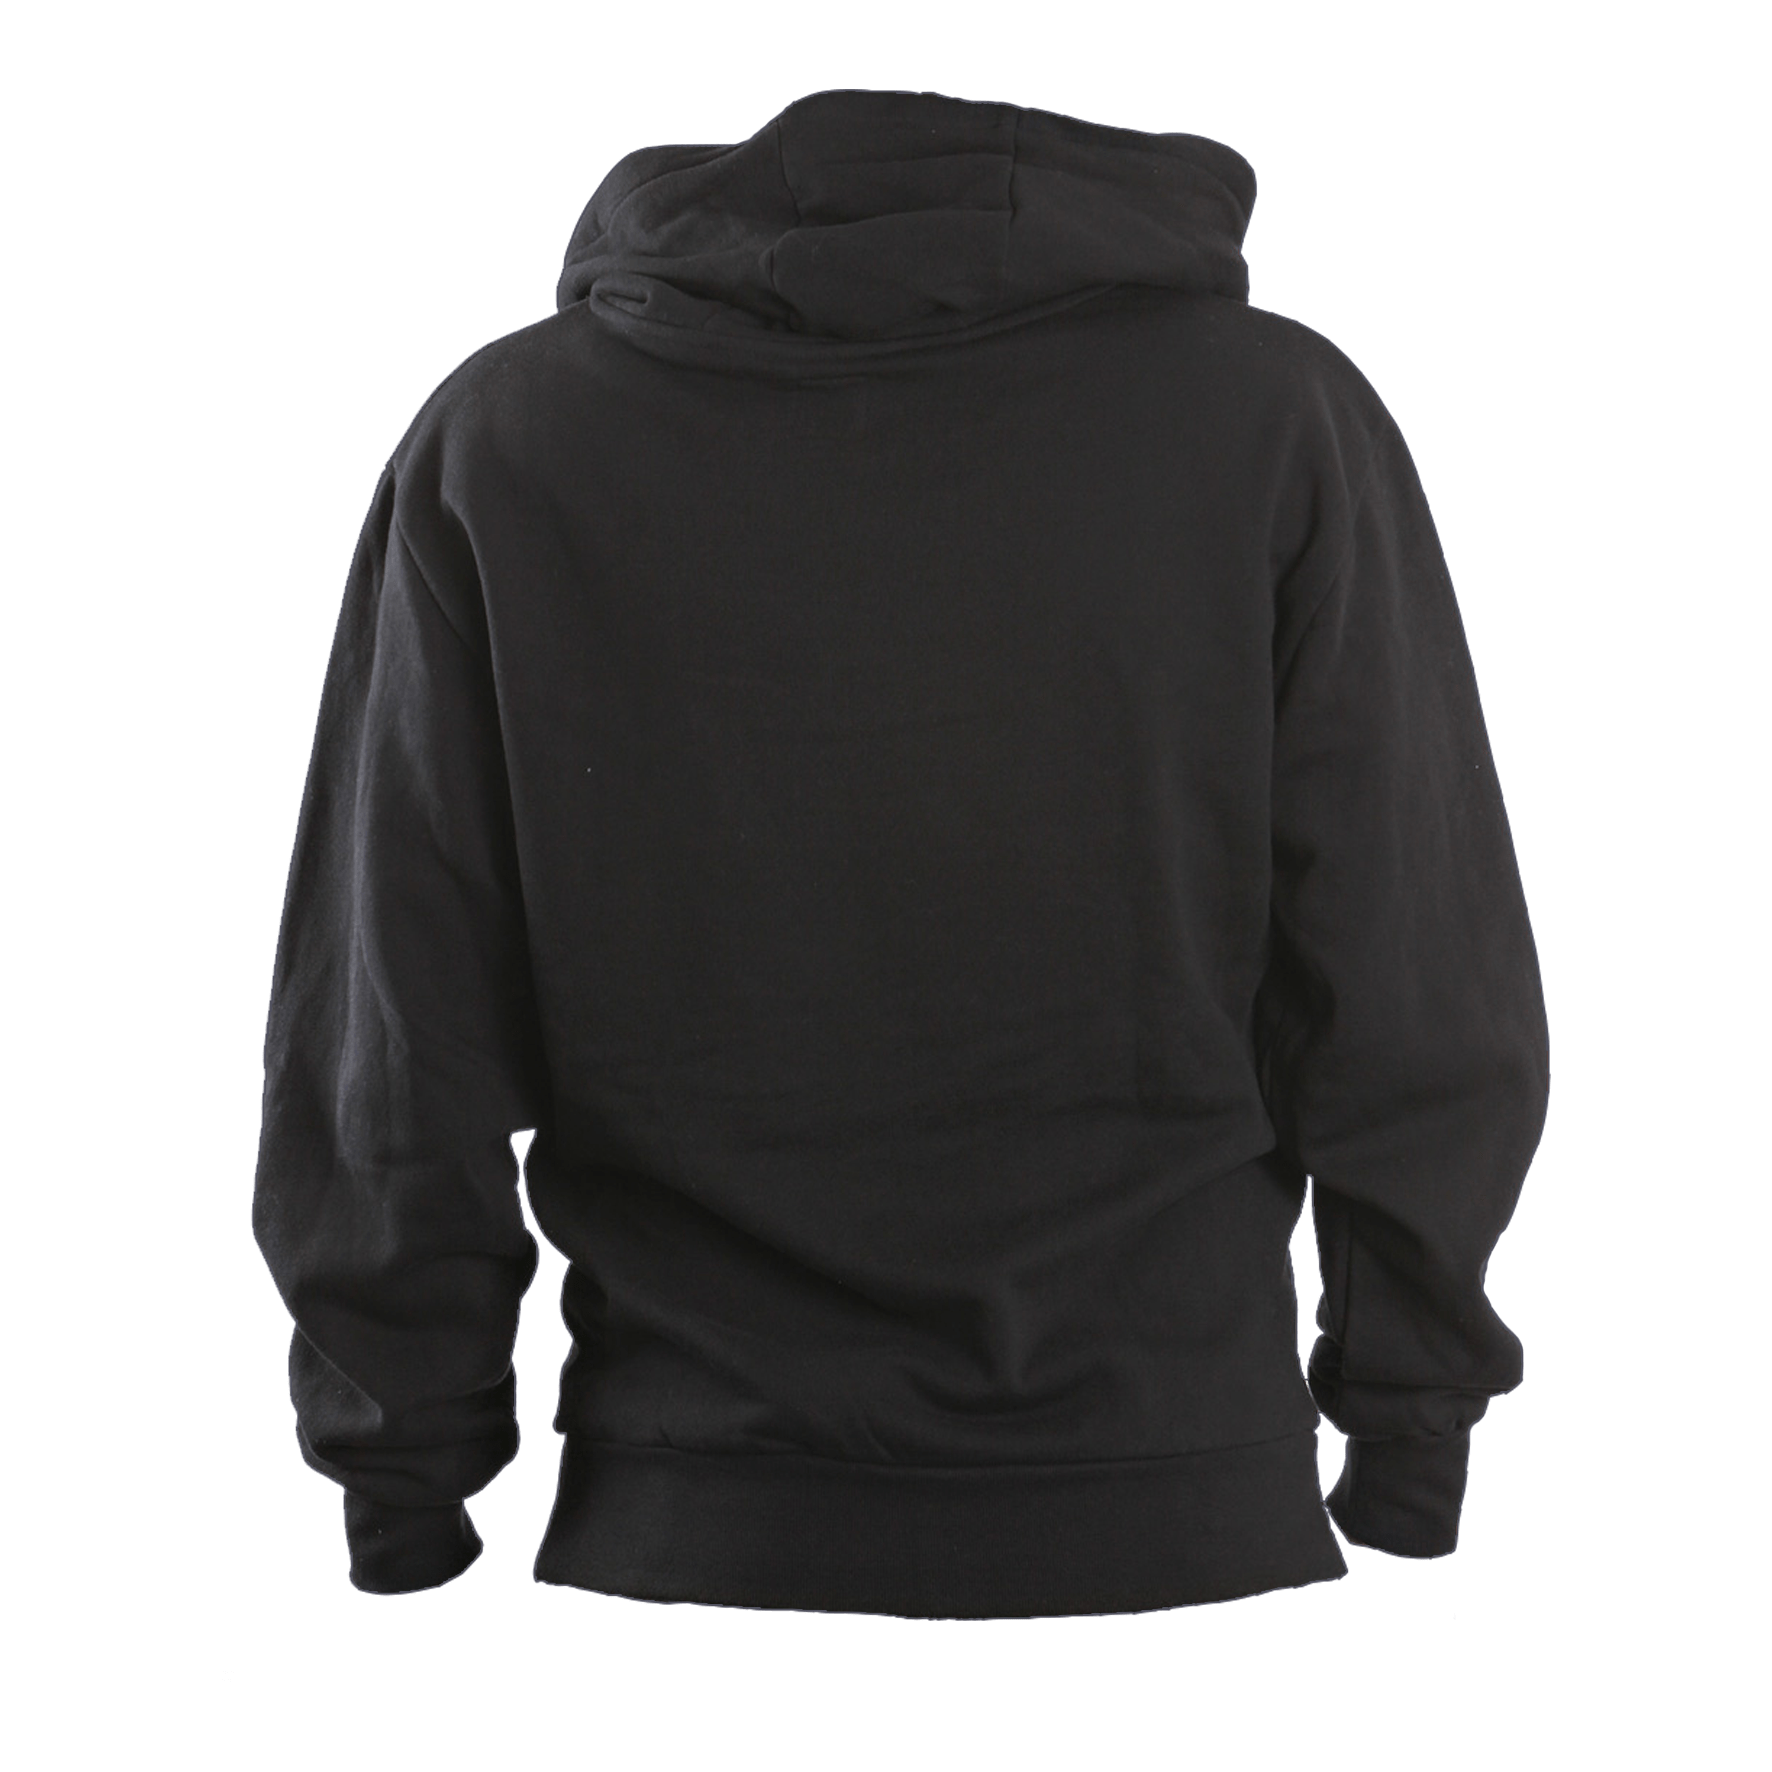 Black Sweatshirt PNG Transparent